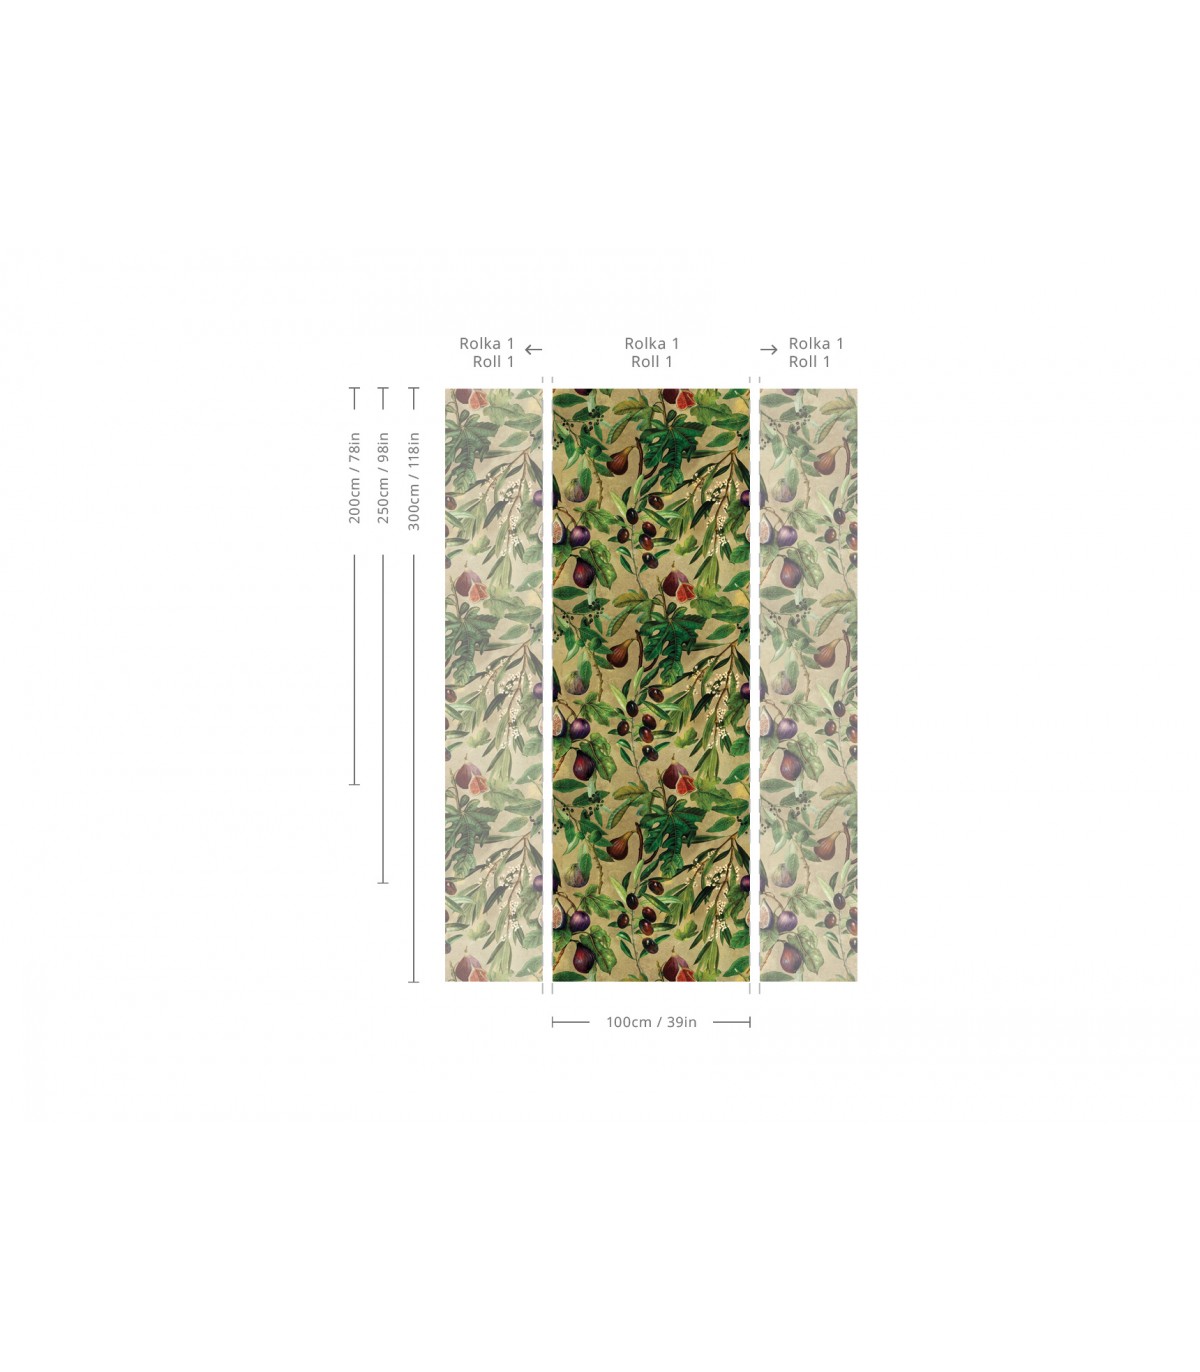 Fig Tapete - Wallcolors  - Exklusive Hintergrundbilder